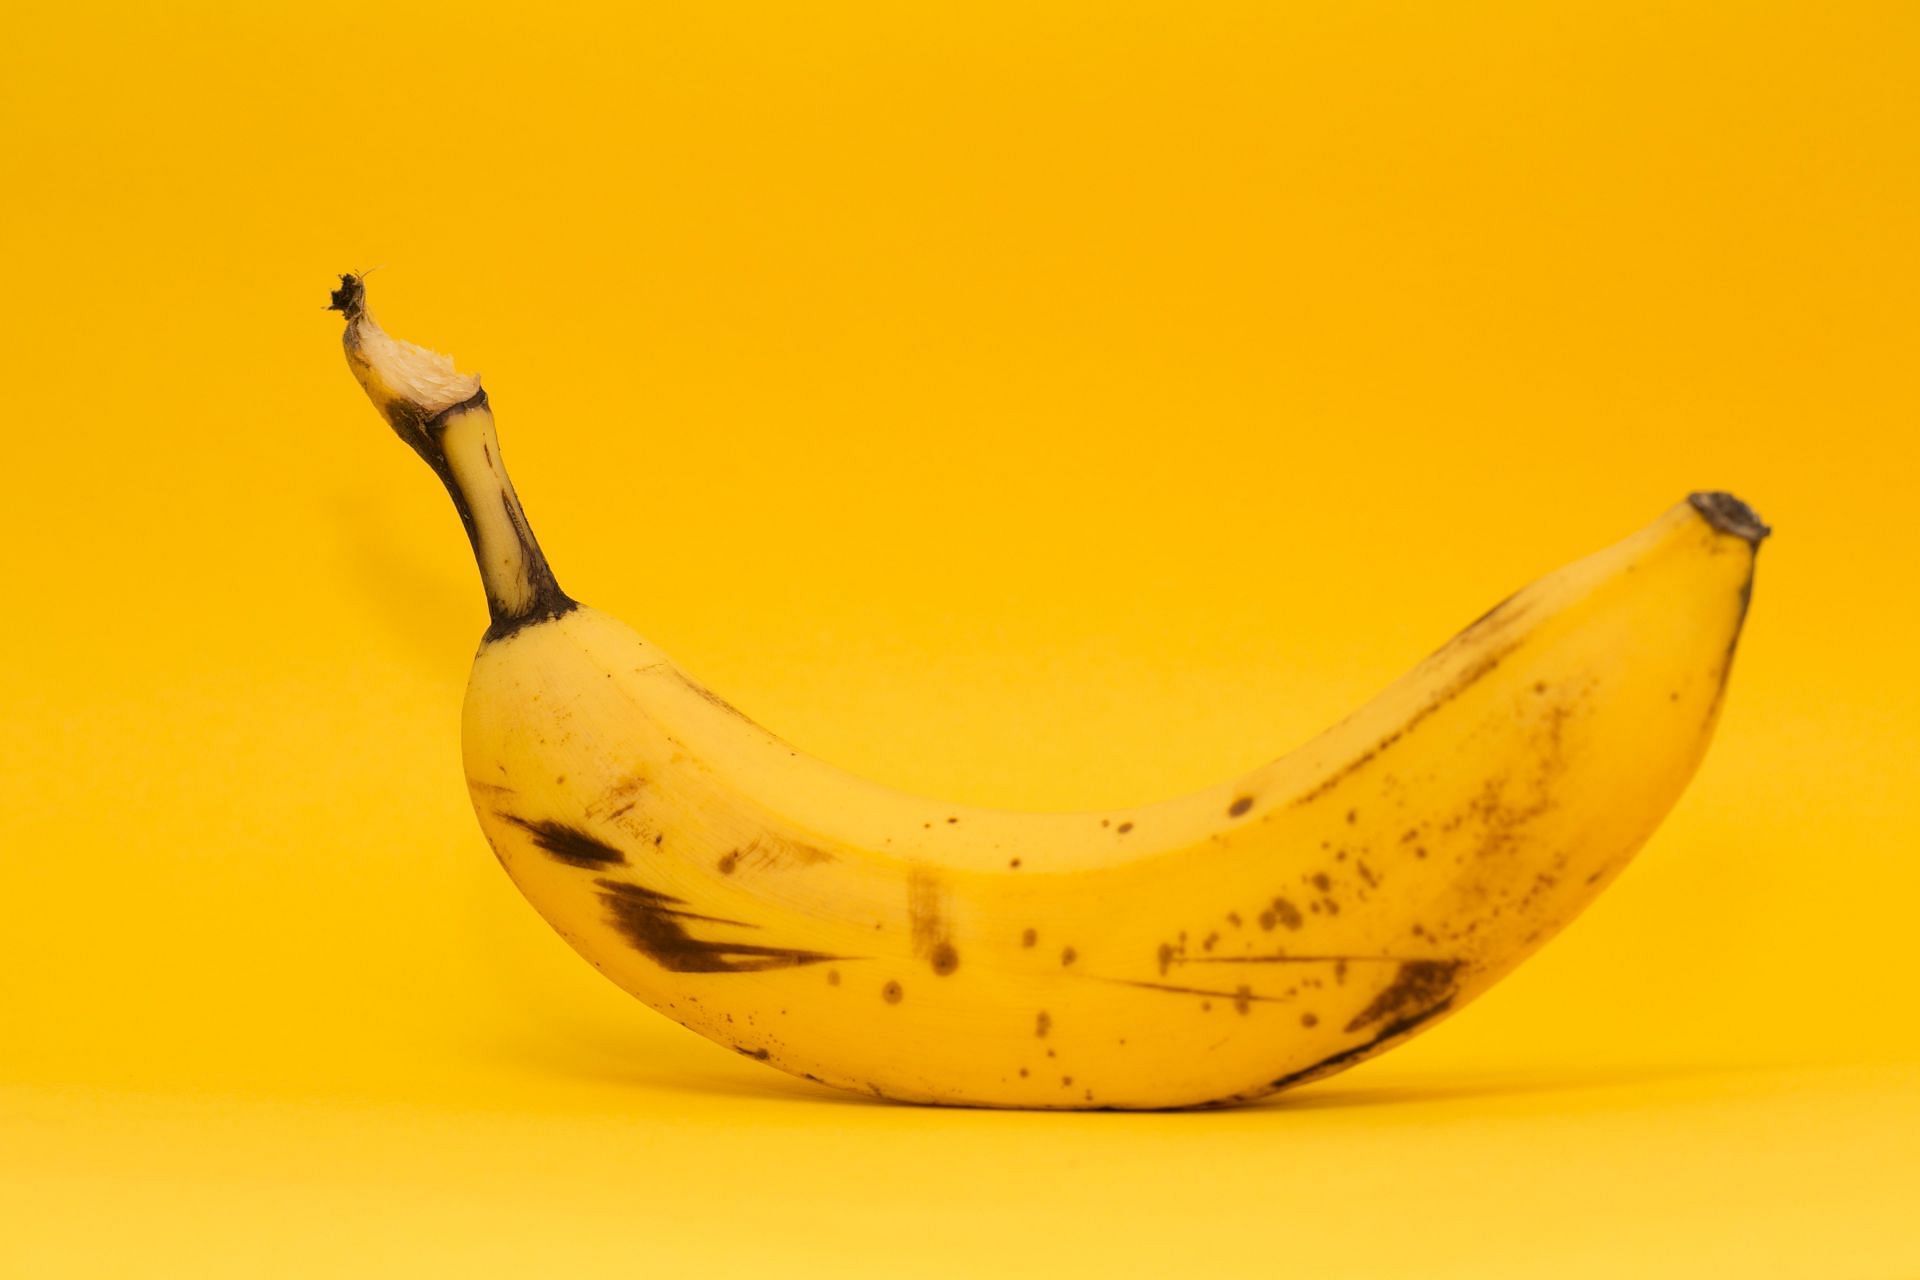 Banana peels for teeth whitening has little scientific evidence. (Image via Unsplash/ Markus Spiske)